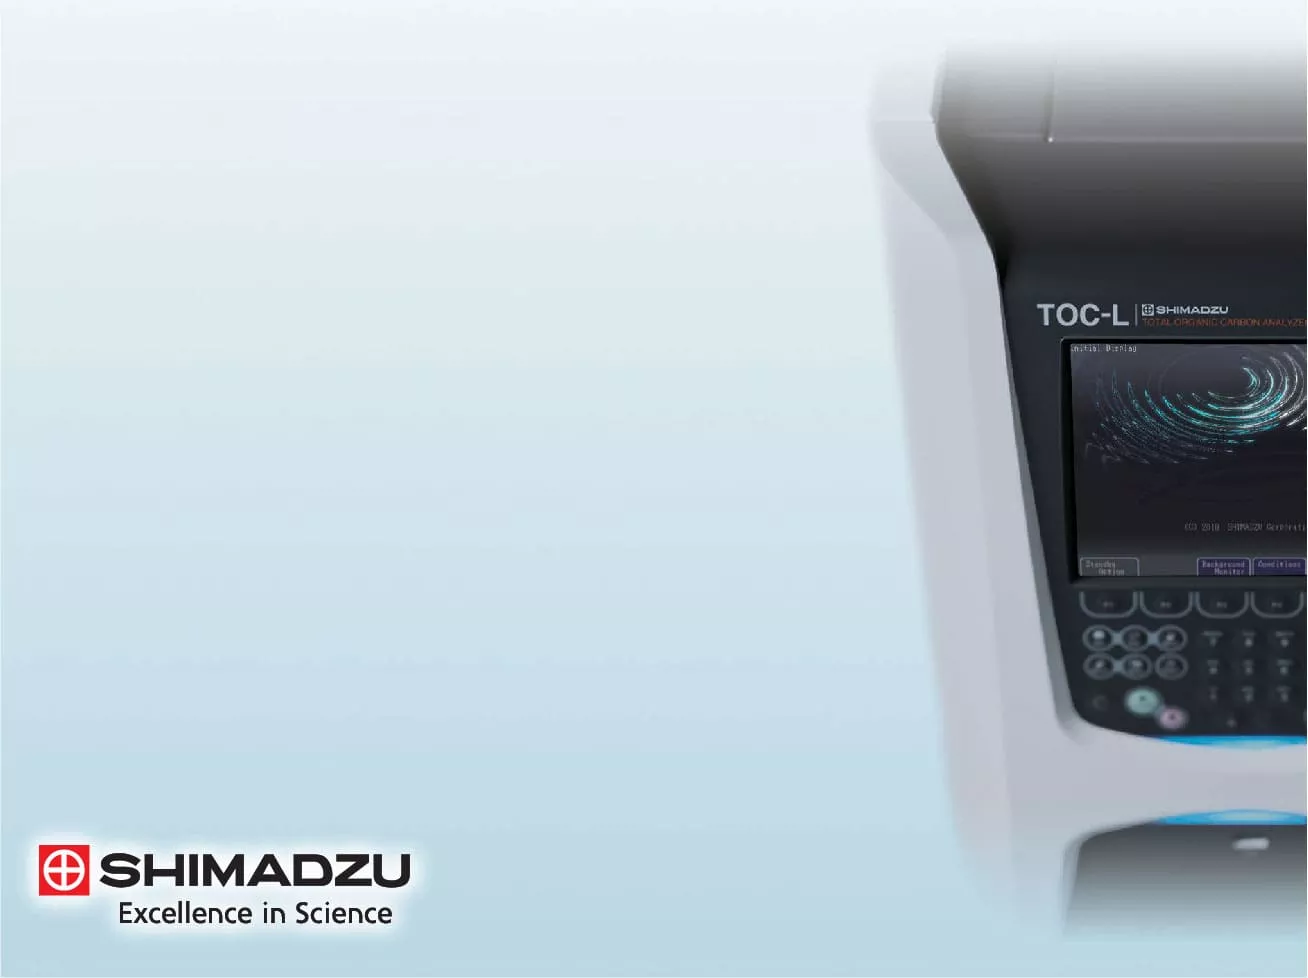 Shimdazu TOC-L Series